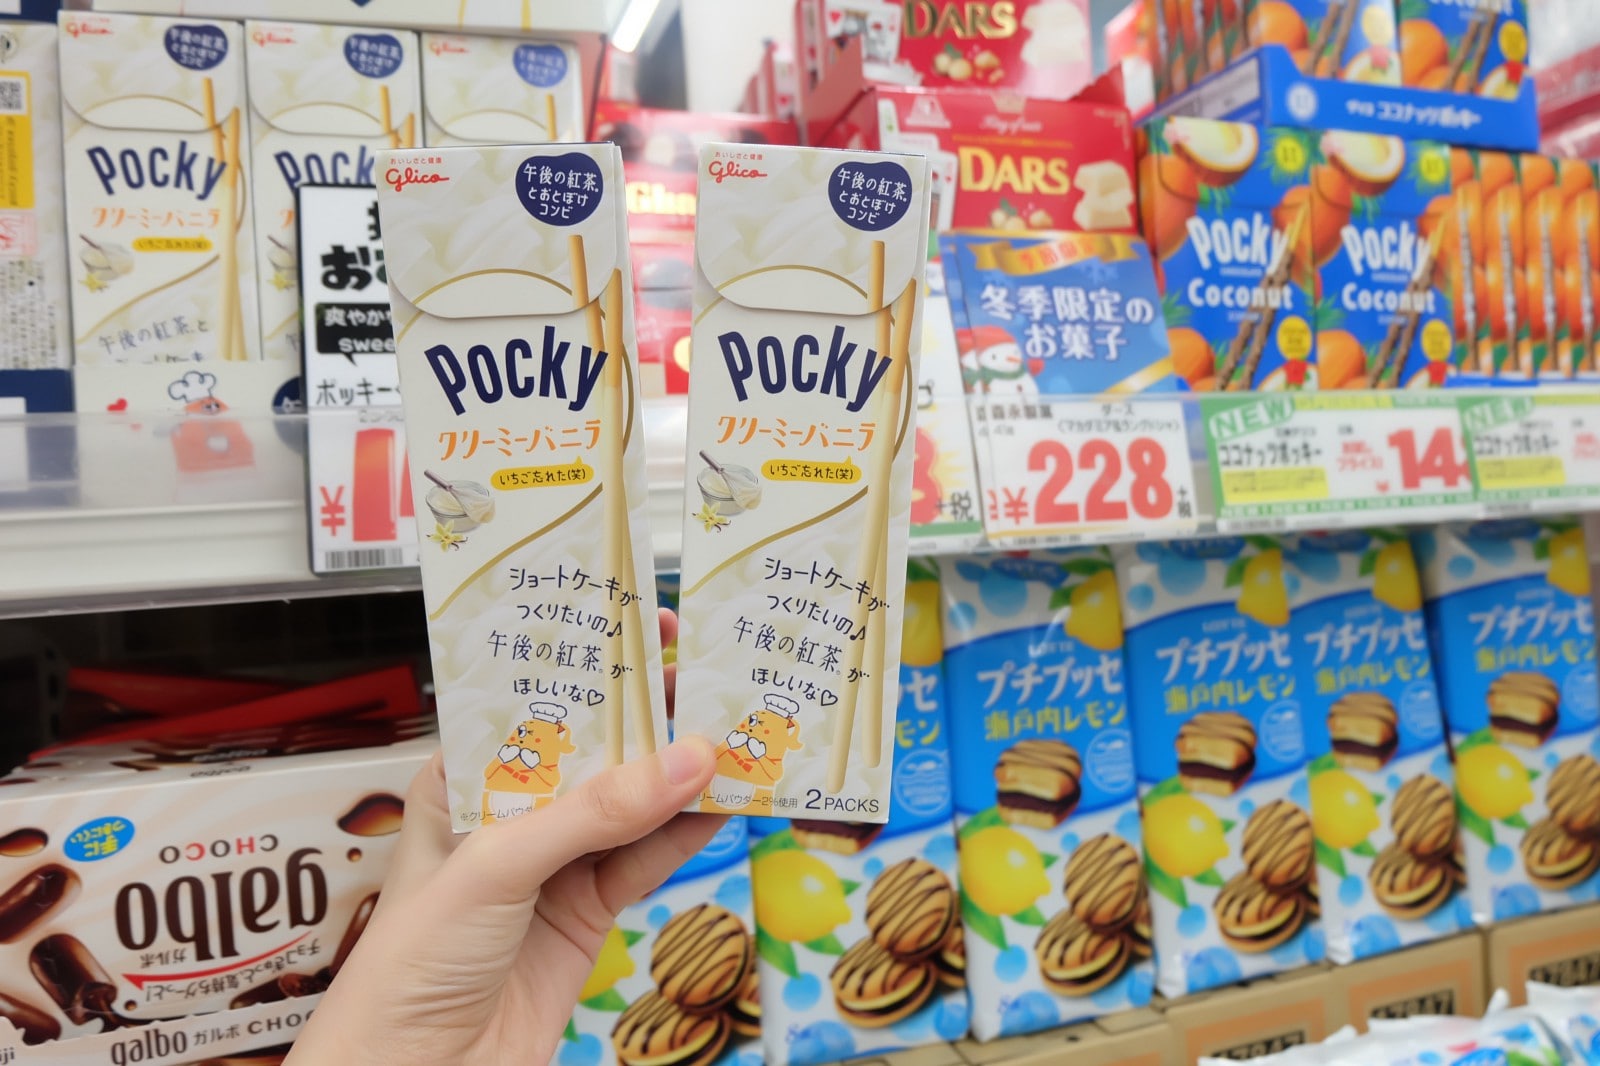 Pocky boxes in Japan